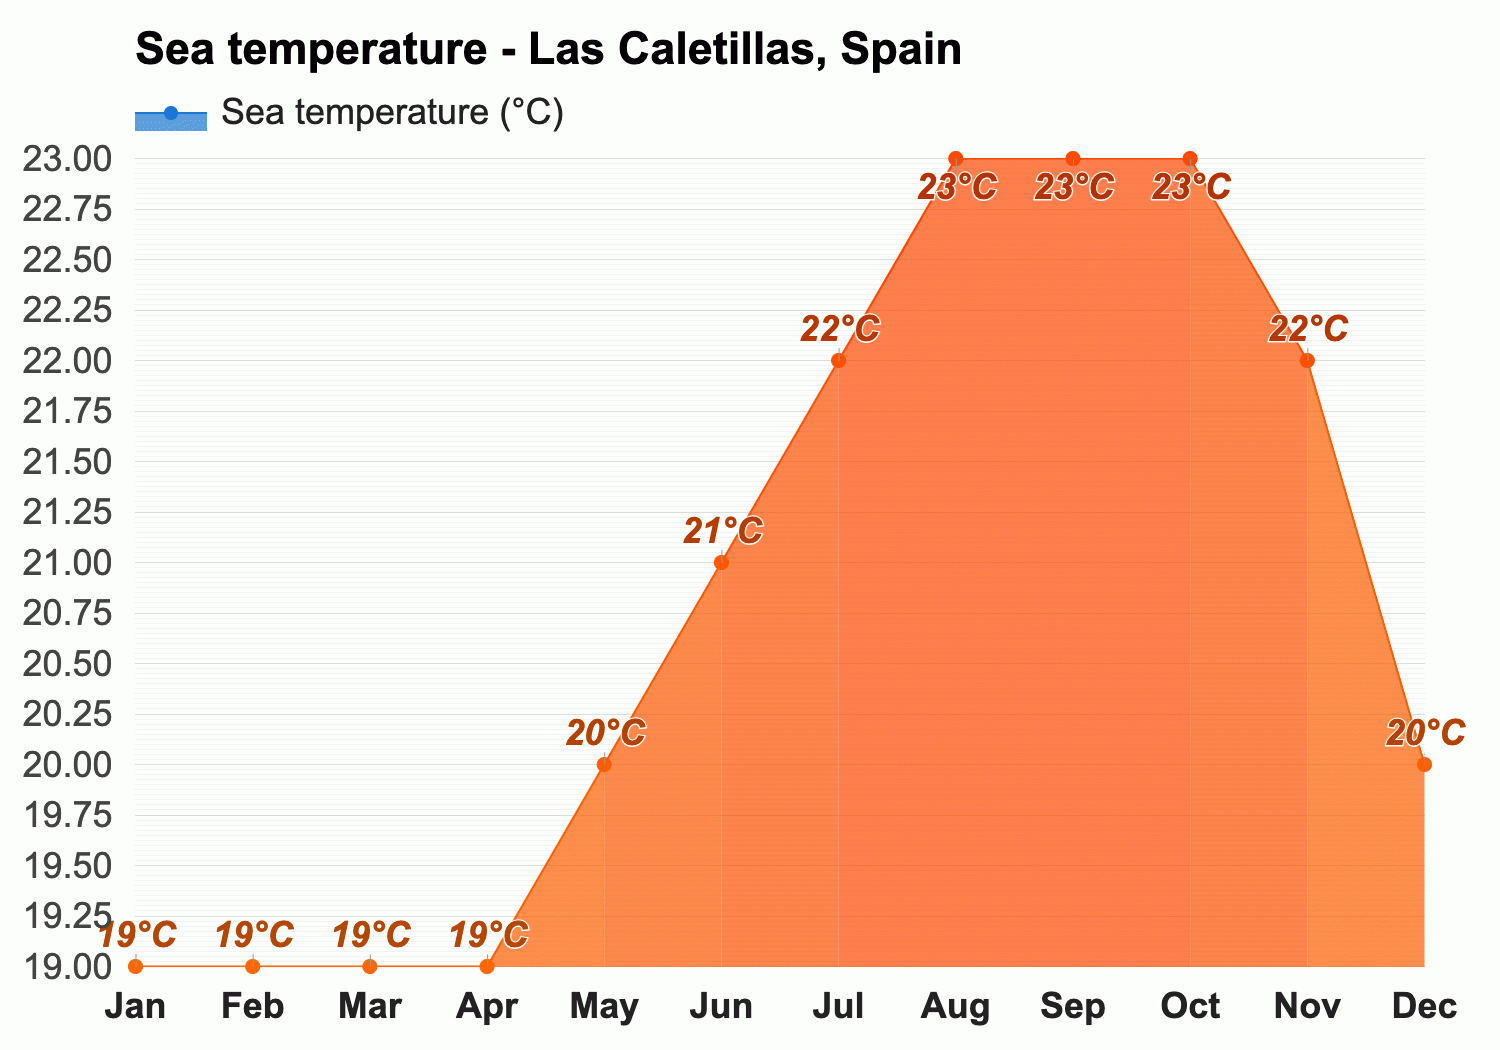 April Weather forecast - Spring forecast - Las Caletillas, Spain